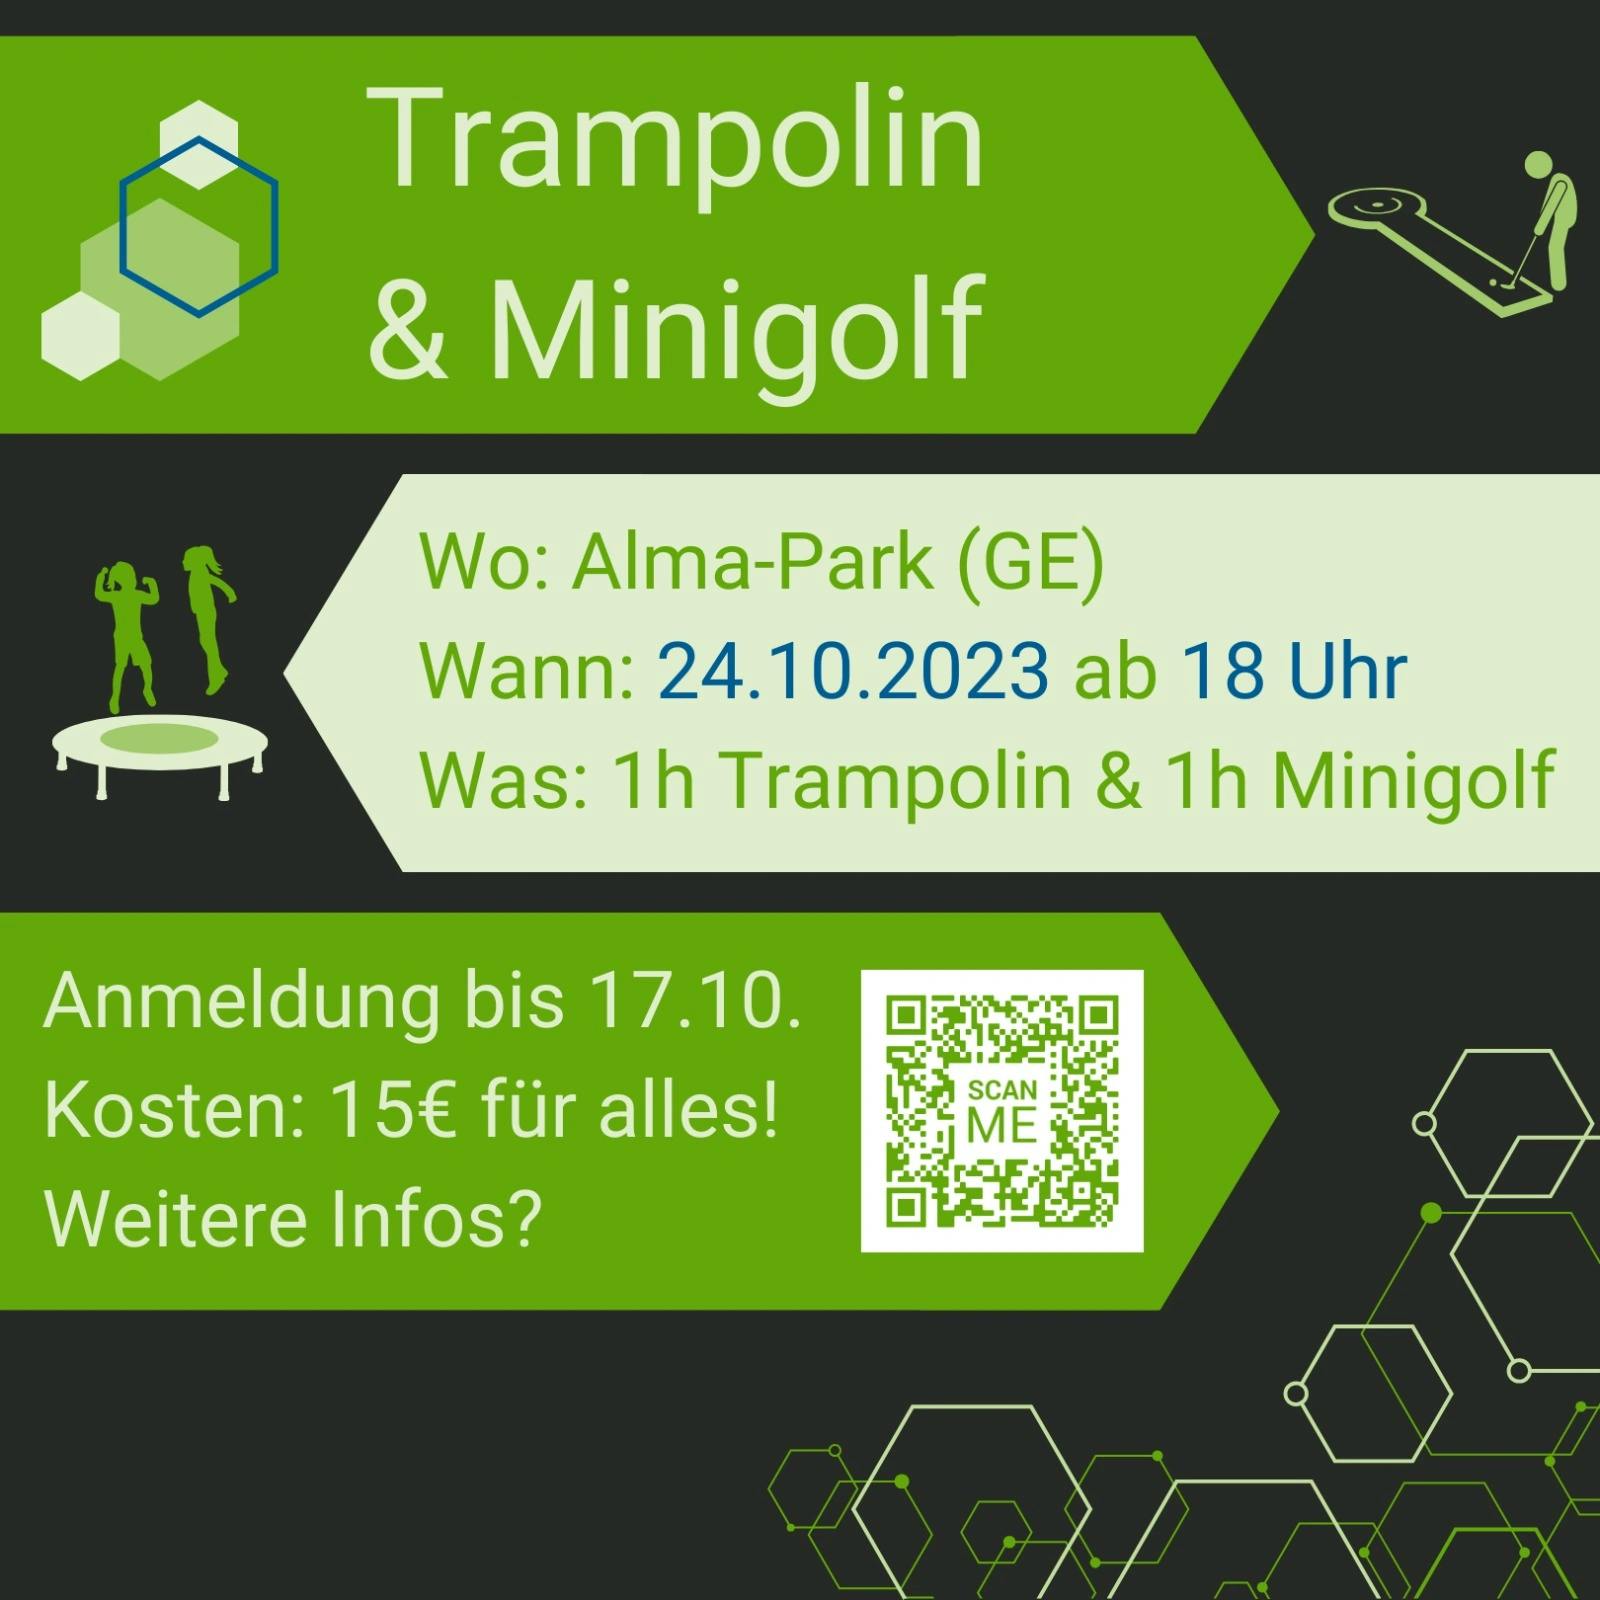 Afterwork "Trampolin & Minigolf"